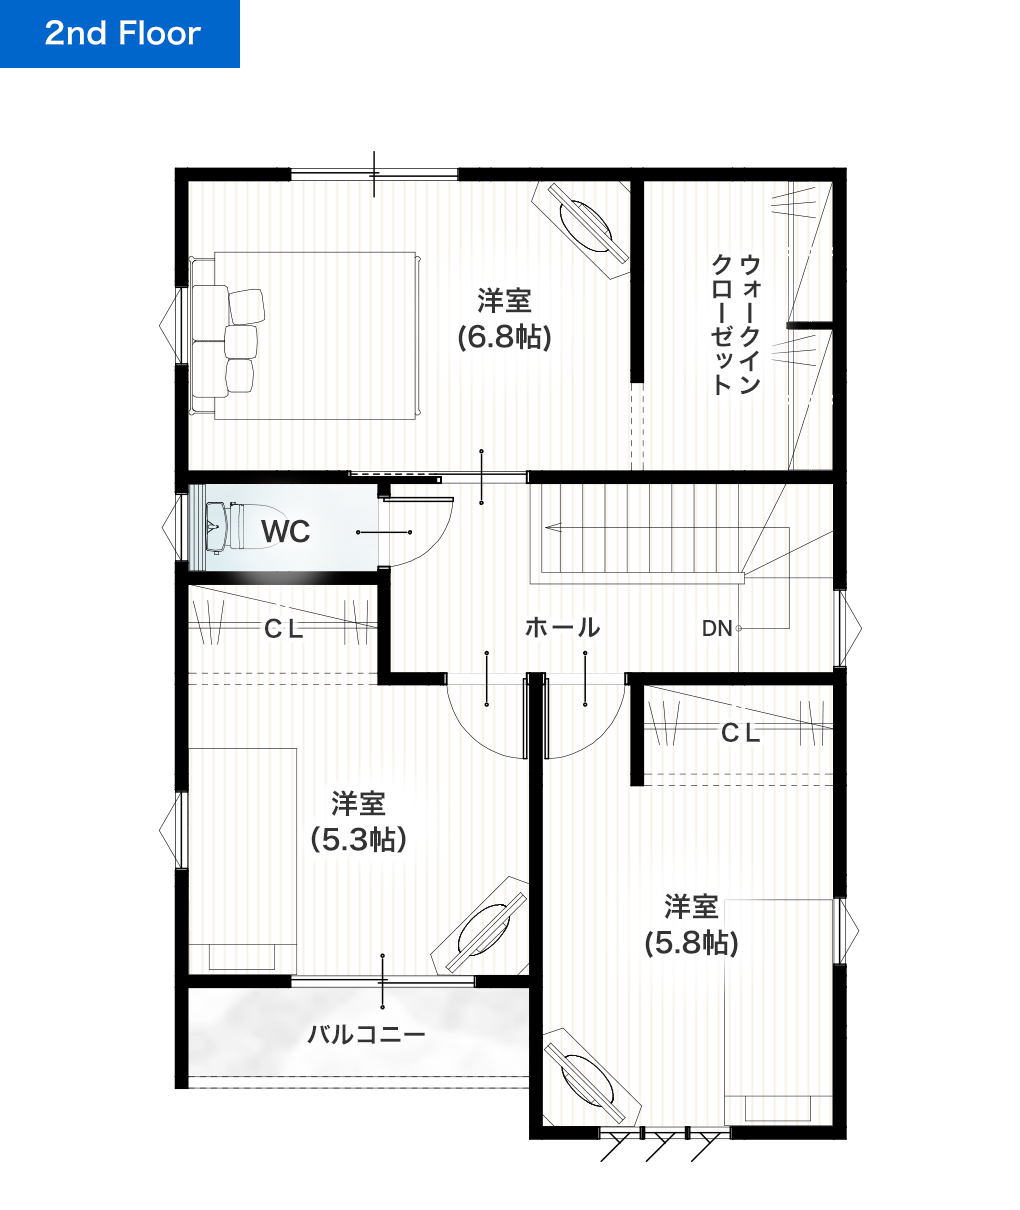 熊本市東区三郎2丁目2号地 28坪 4LDK 建売・一戸建ての新築物件 2階間取り図